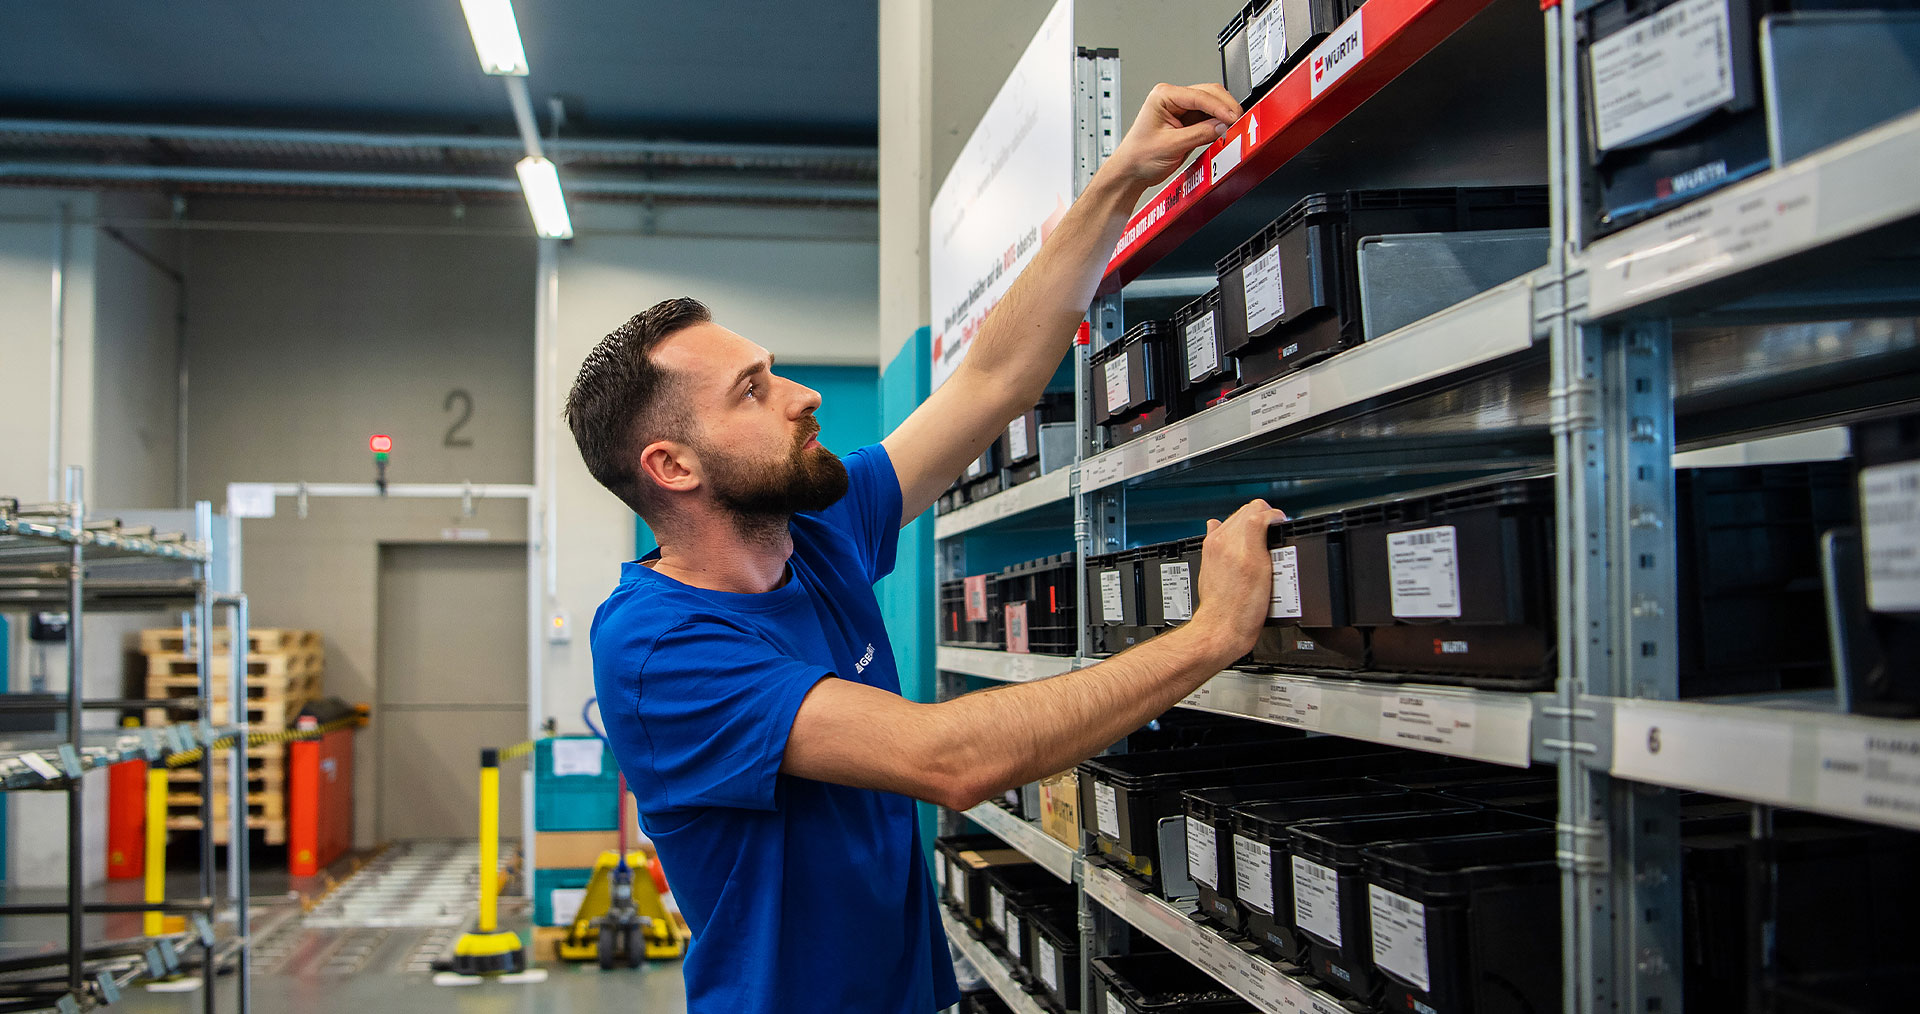 An employee searching an intelligent shelf in a warehouse